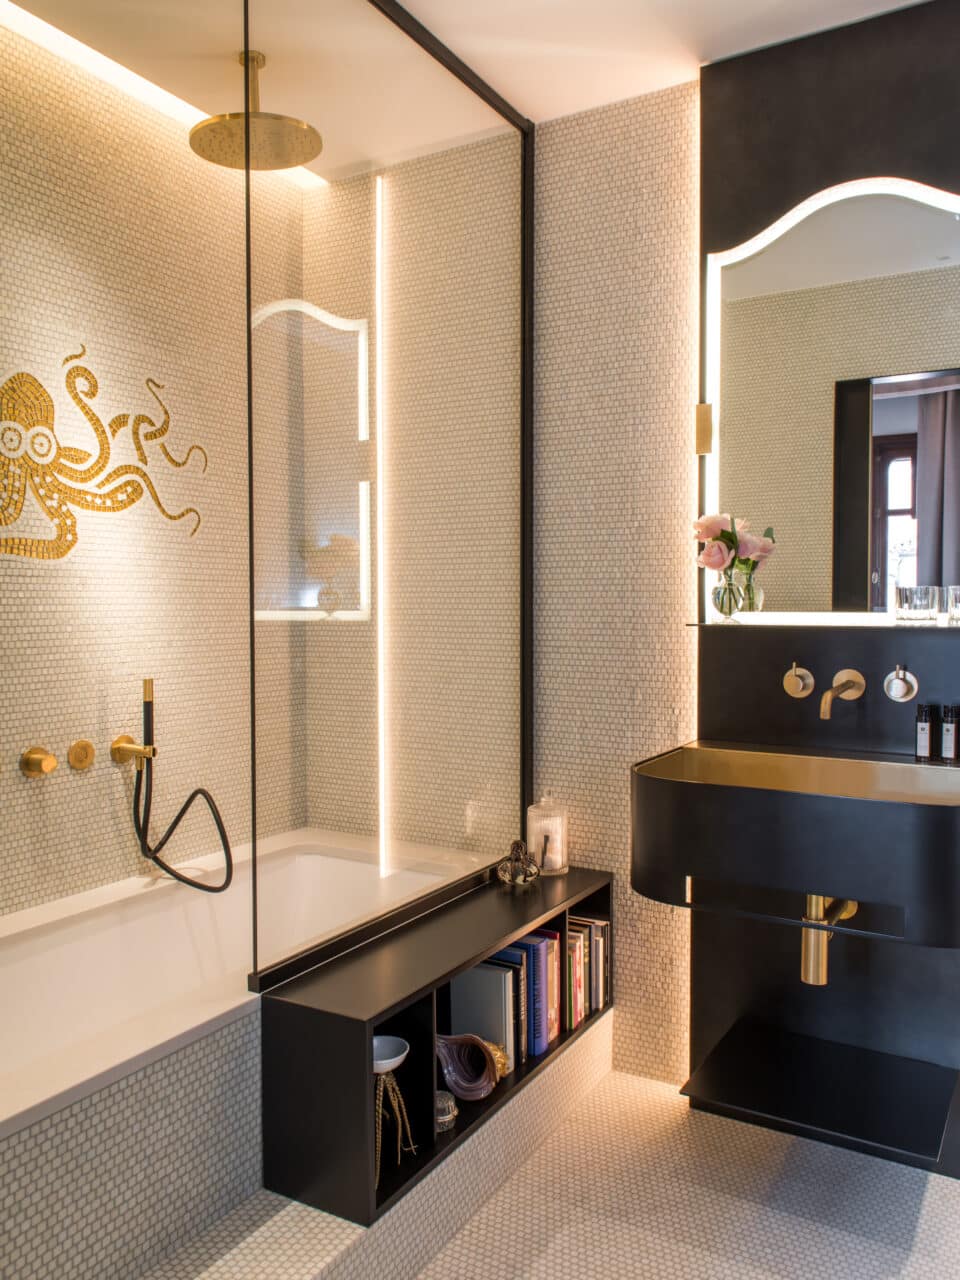 bathroom superior suite 5 star luxury hotel venice italy